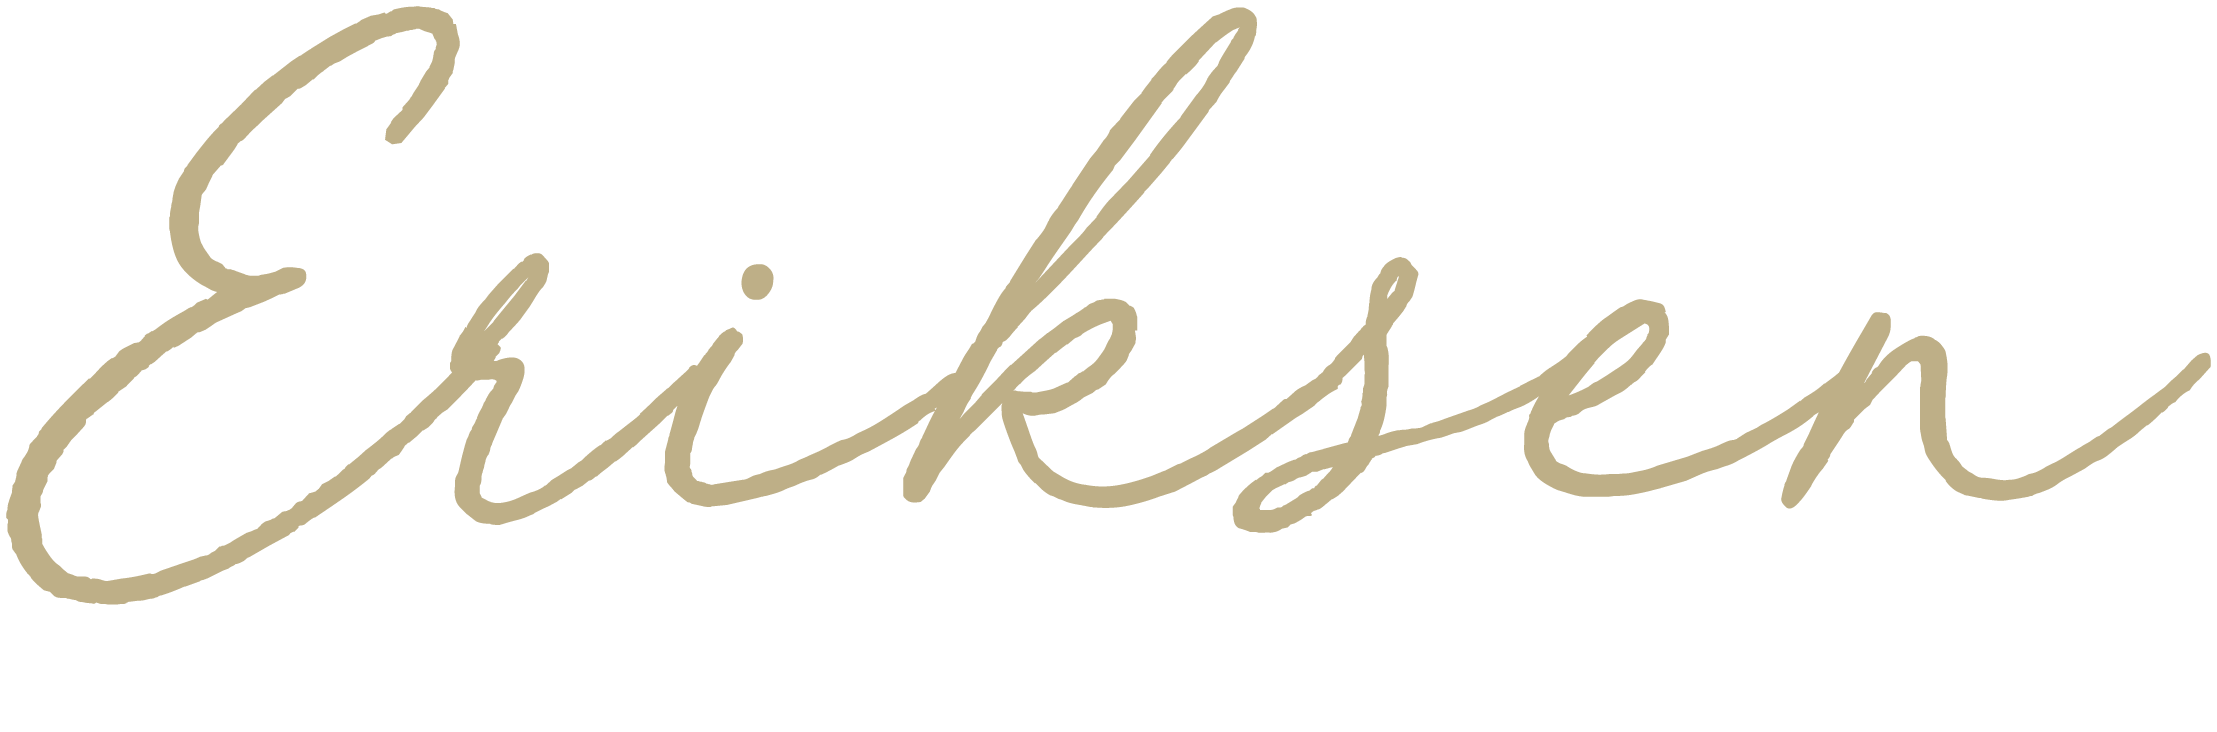 Eriksen Logo2